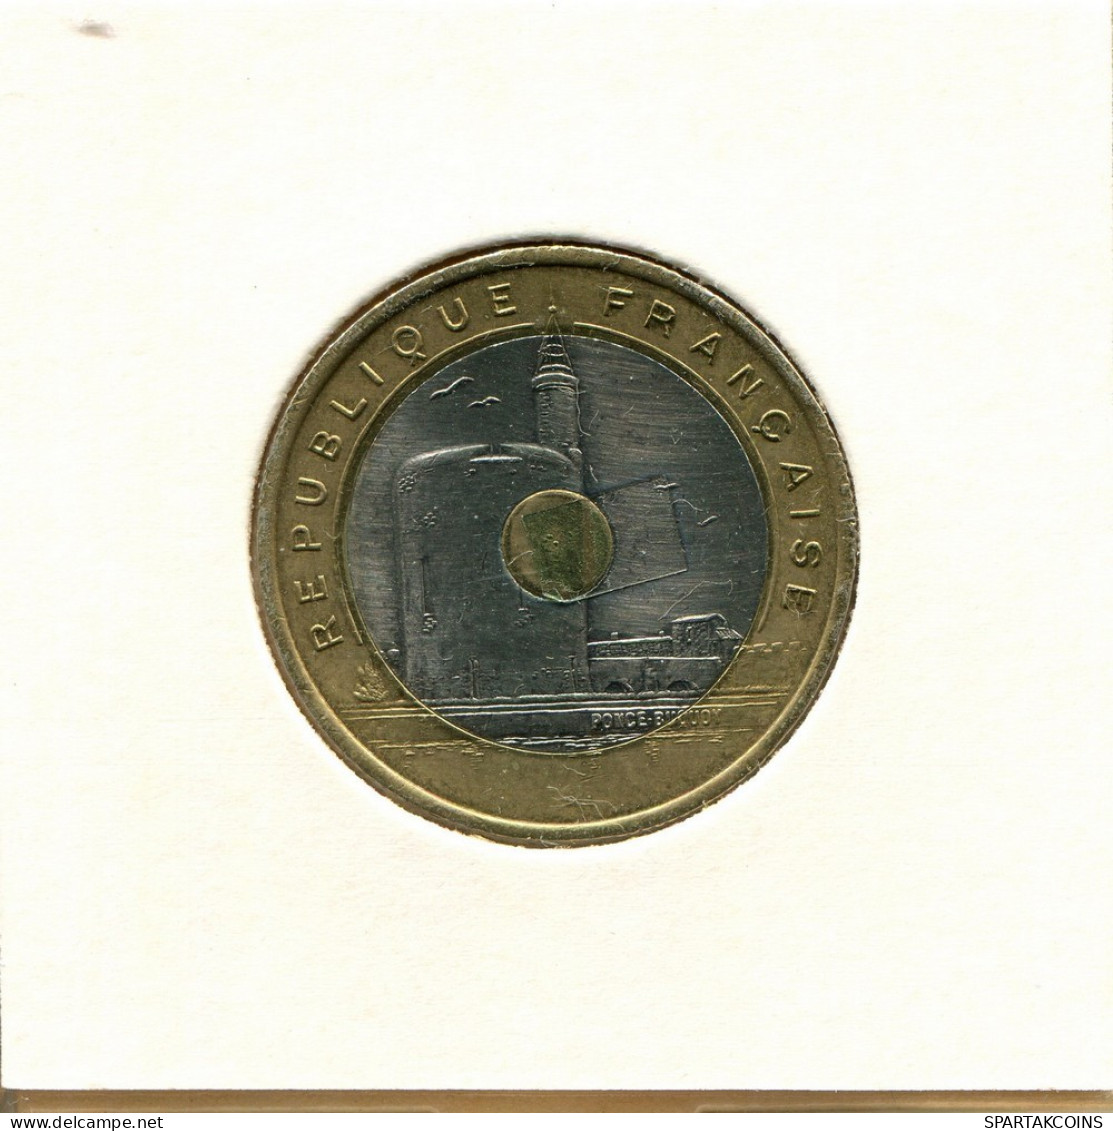 20 FRANCS 1993 FRANCE Pièce BIMETALLIC #BB632.F.A - 20 Francs